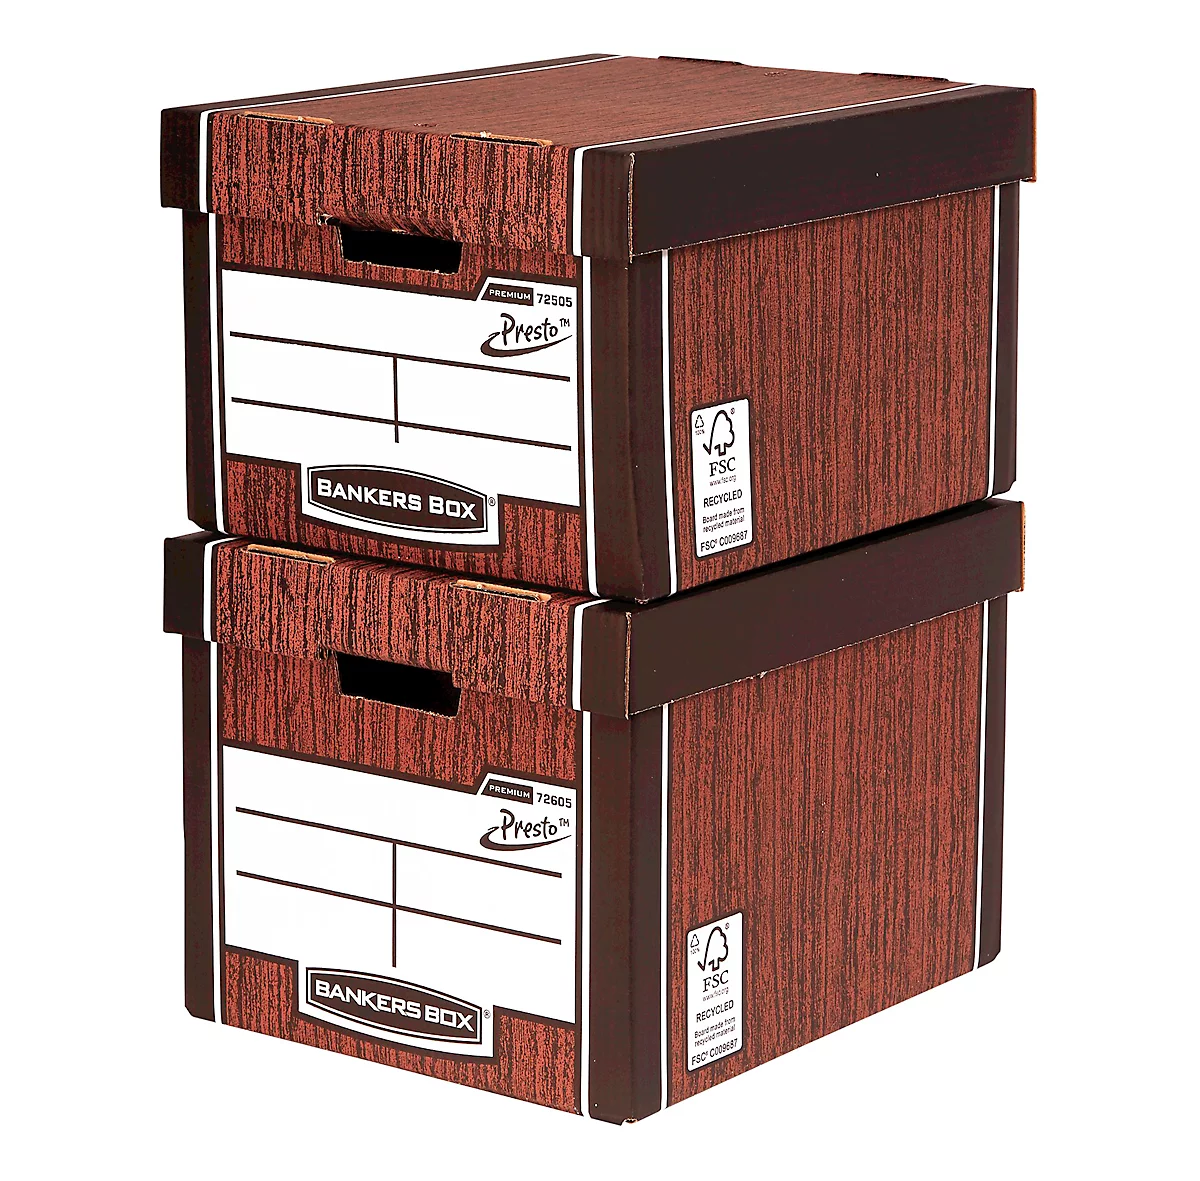 Archivbox BANKERS BOX® Premium Classic, für A4-Formate, stapelbar